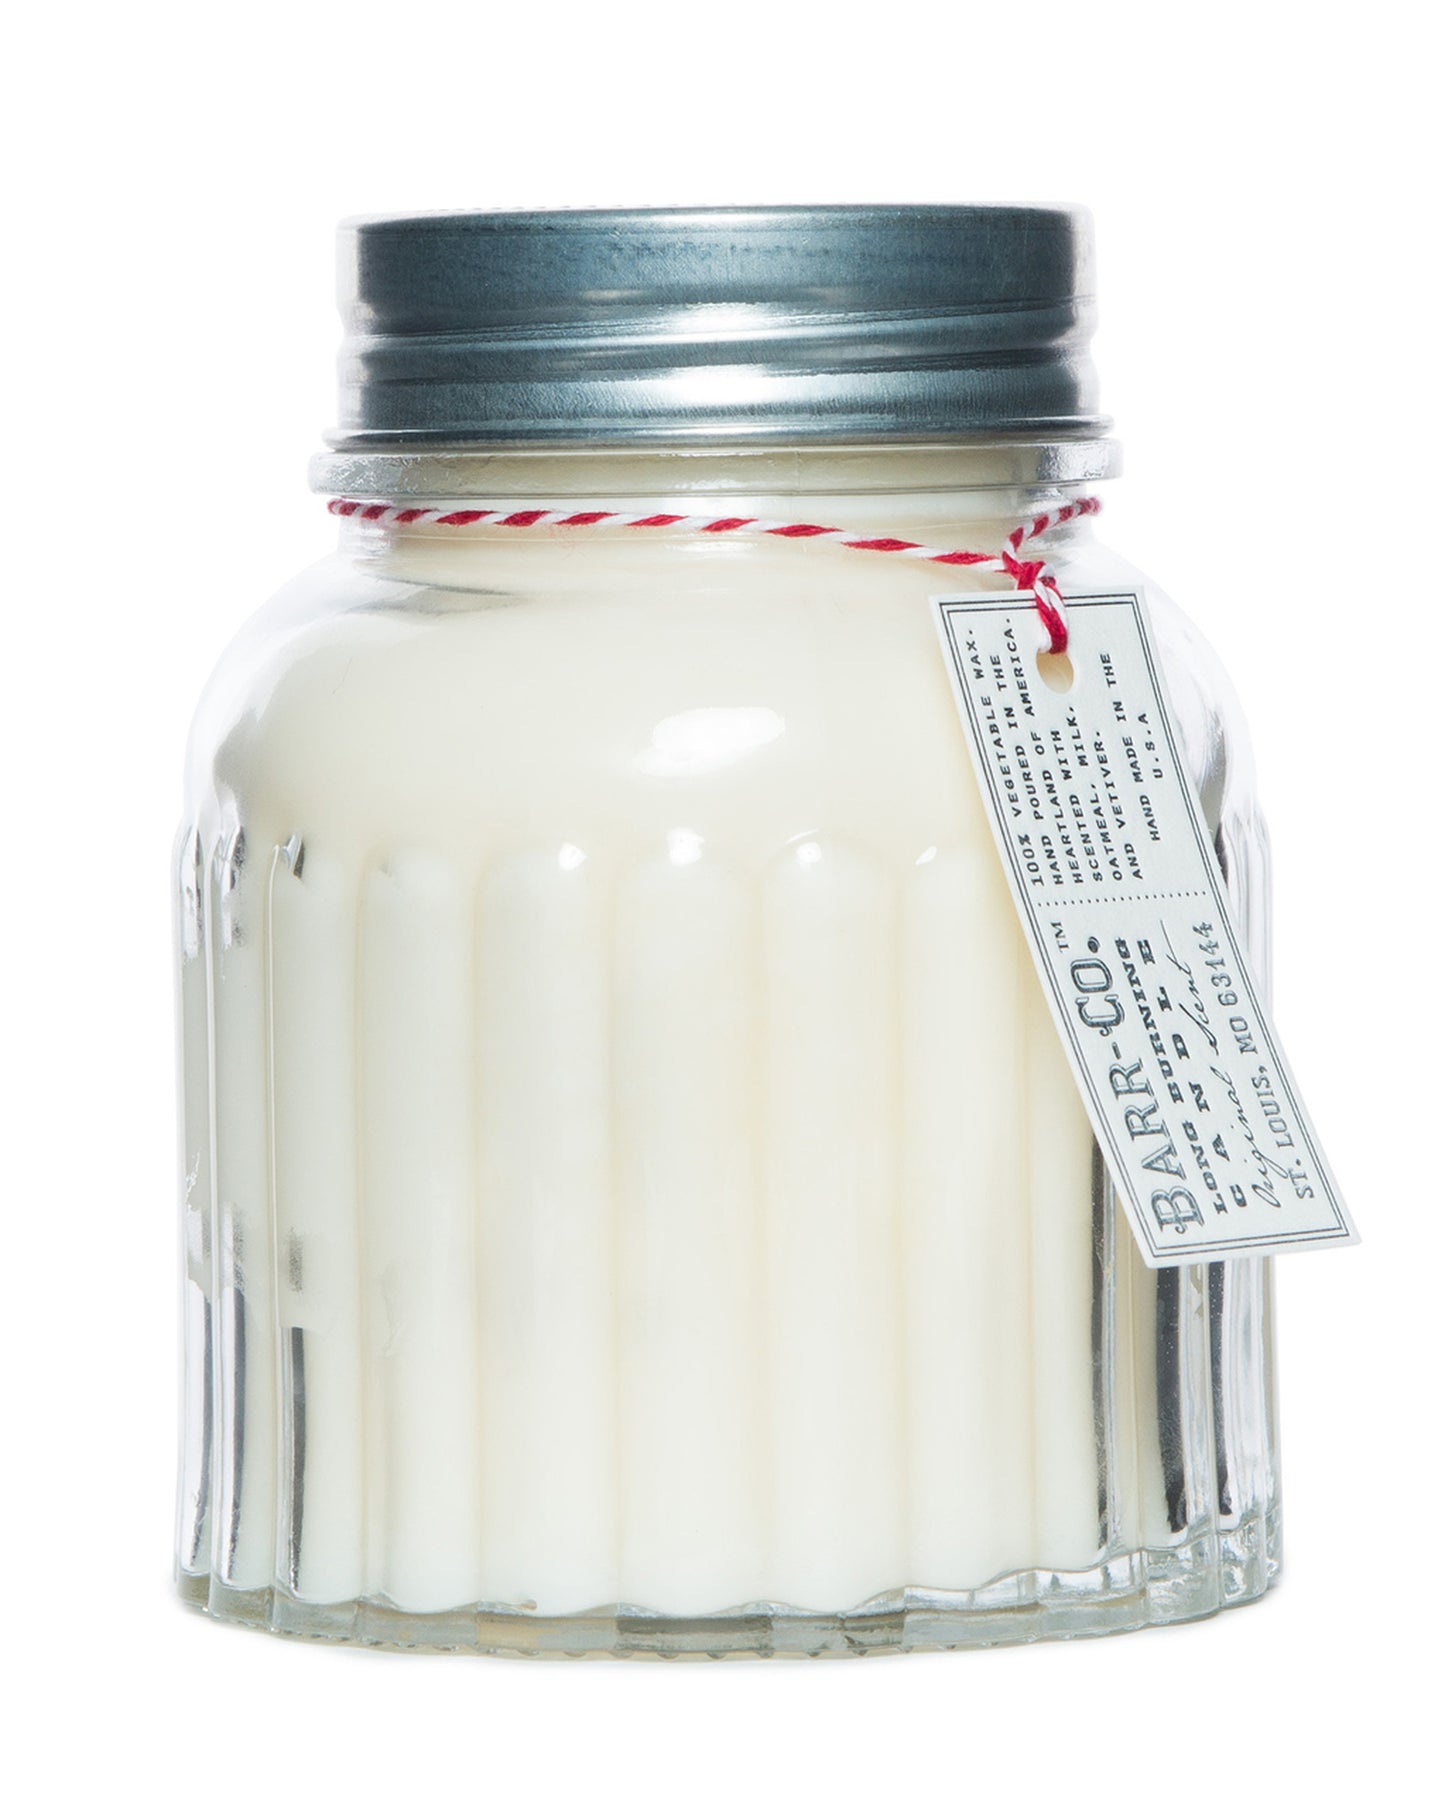 Barr Co Apothecary Jar Candle - Original